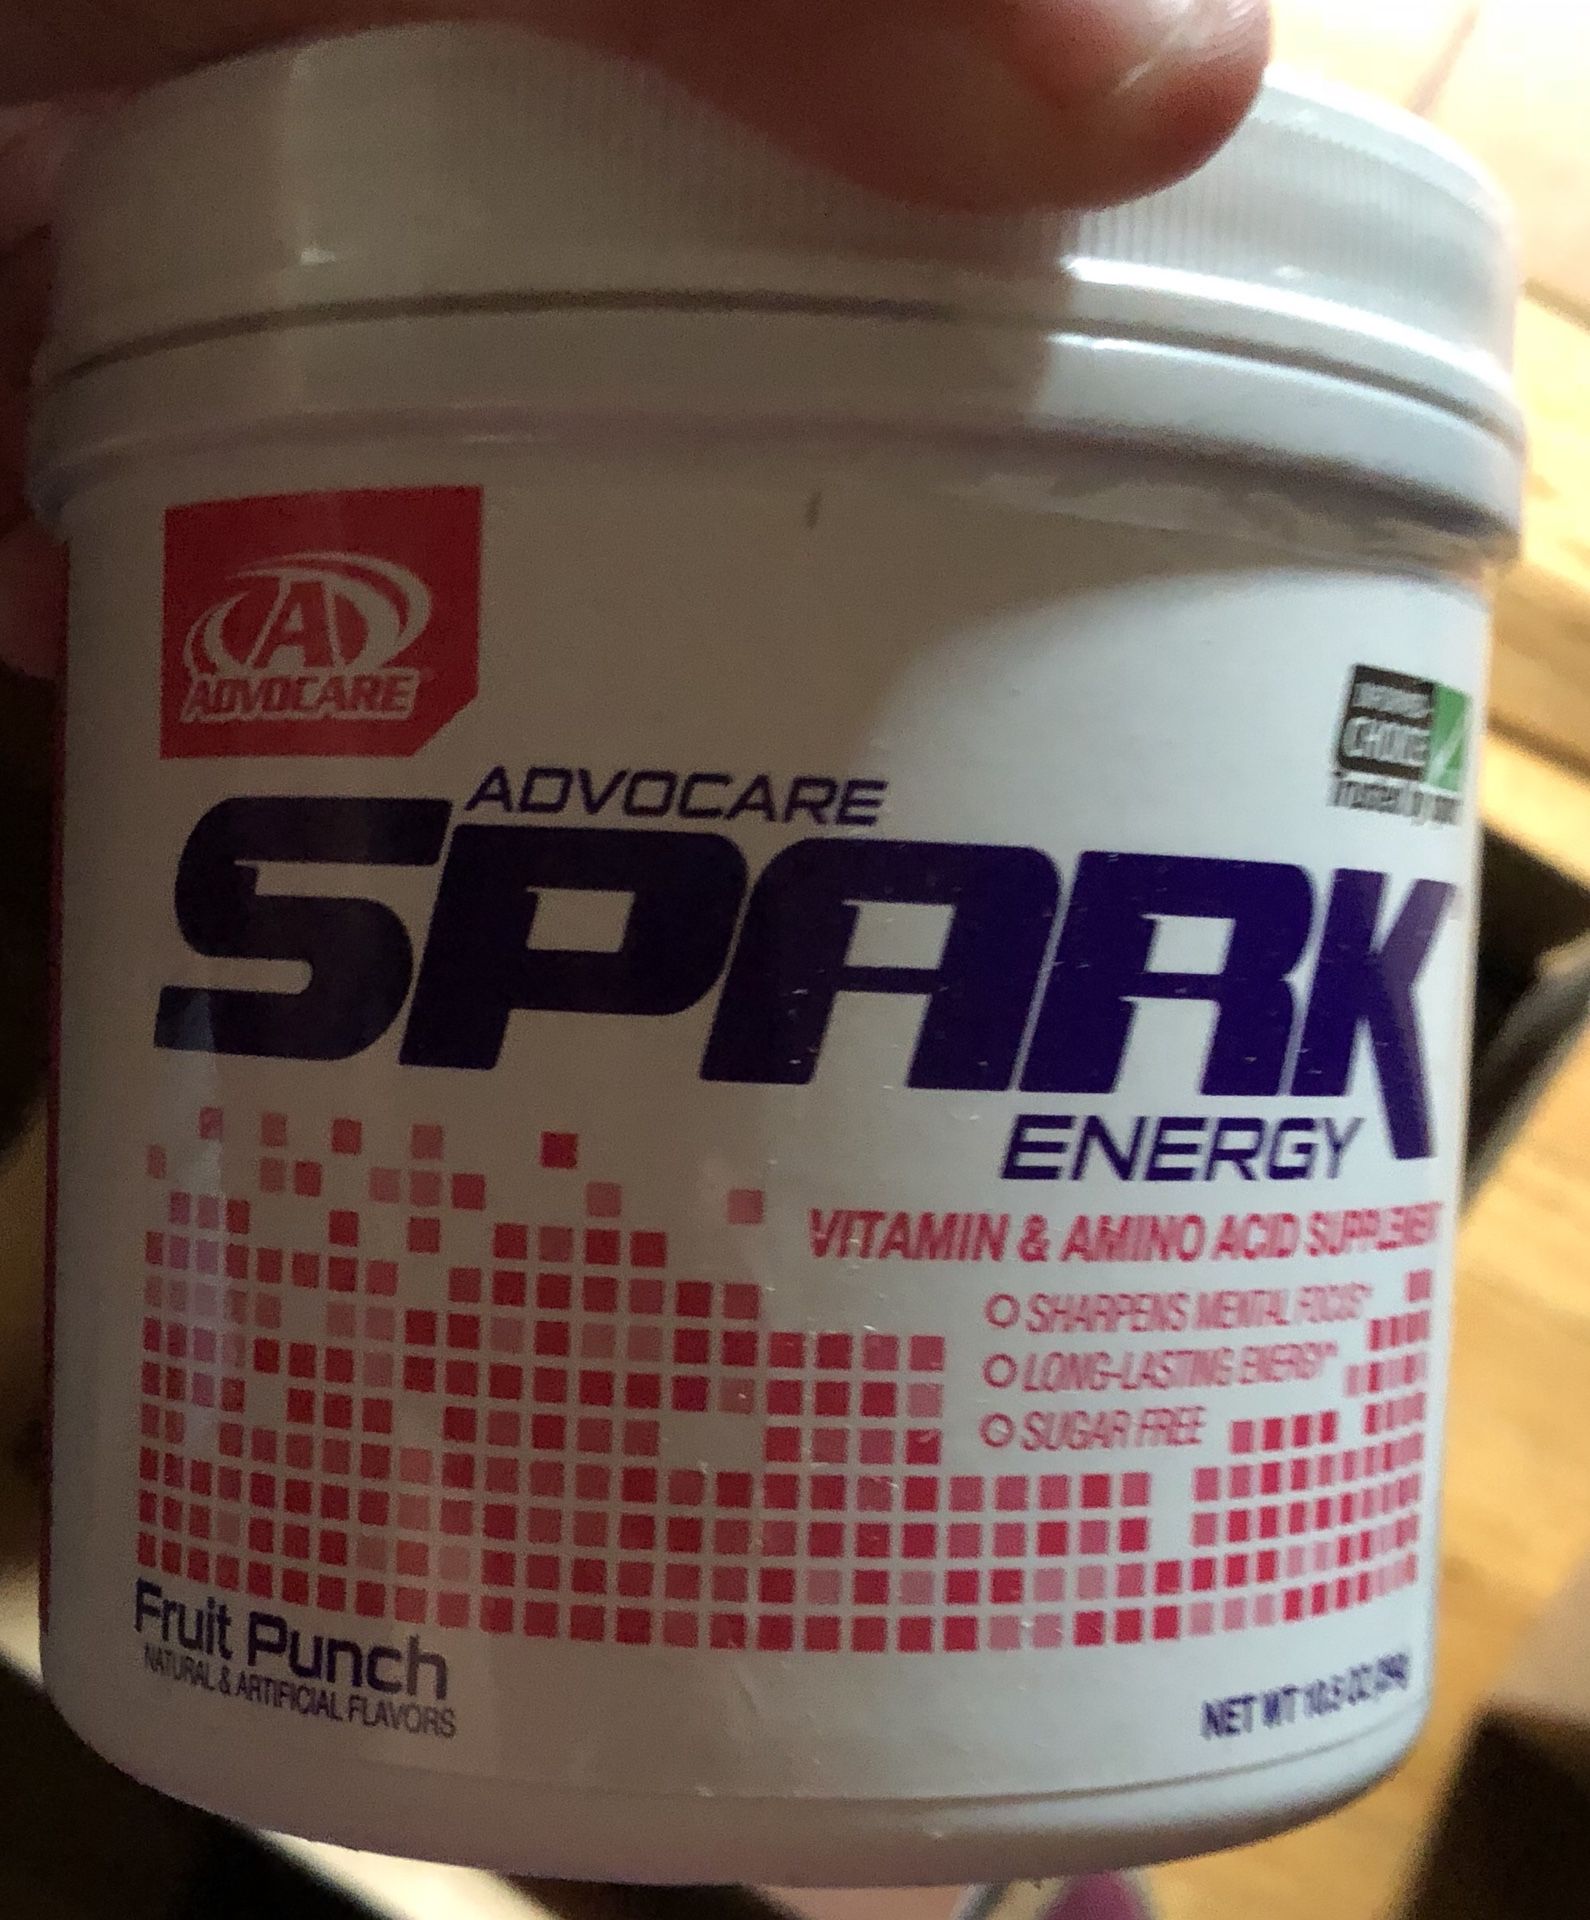 Advocare spark energy tubs